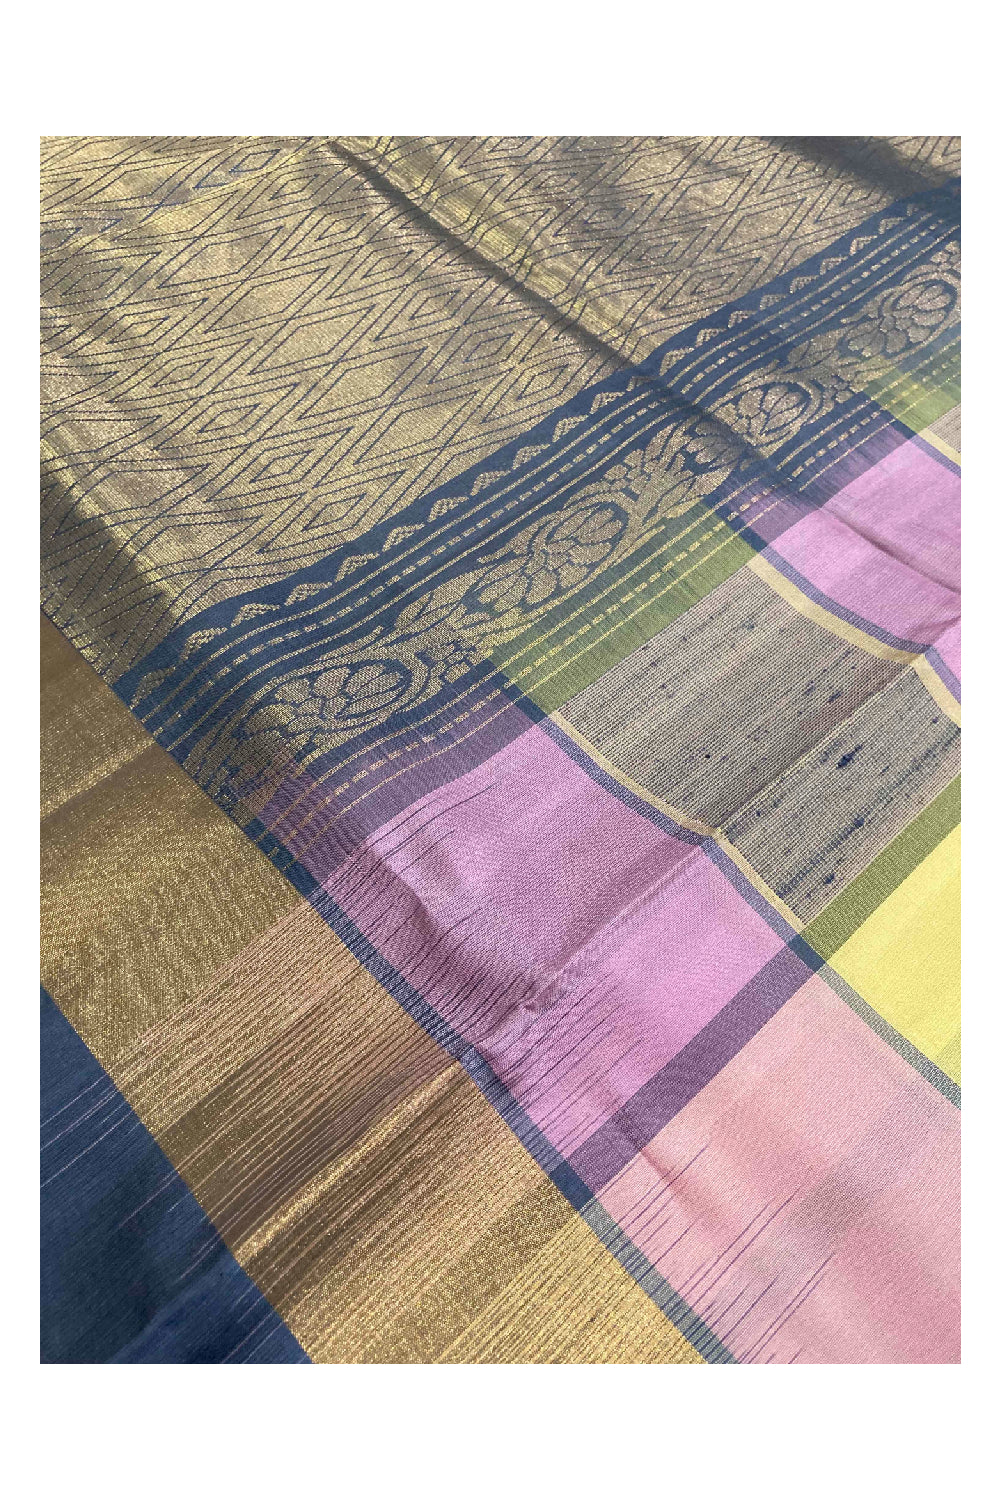 Southloom Handloom Pure Silk Kanchipuram Saree in Yellow Violet Check Box Design